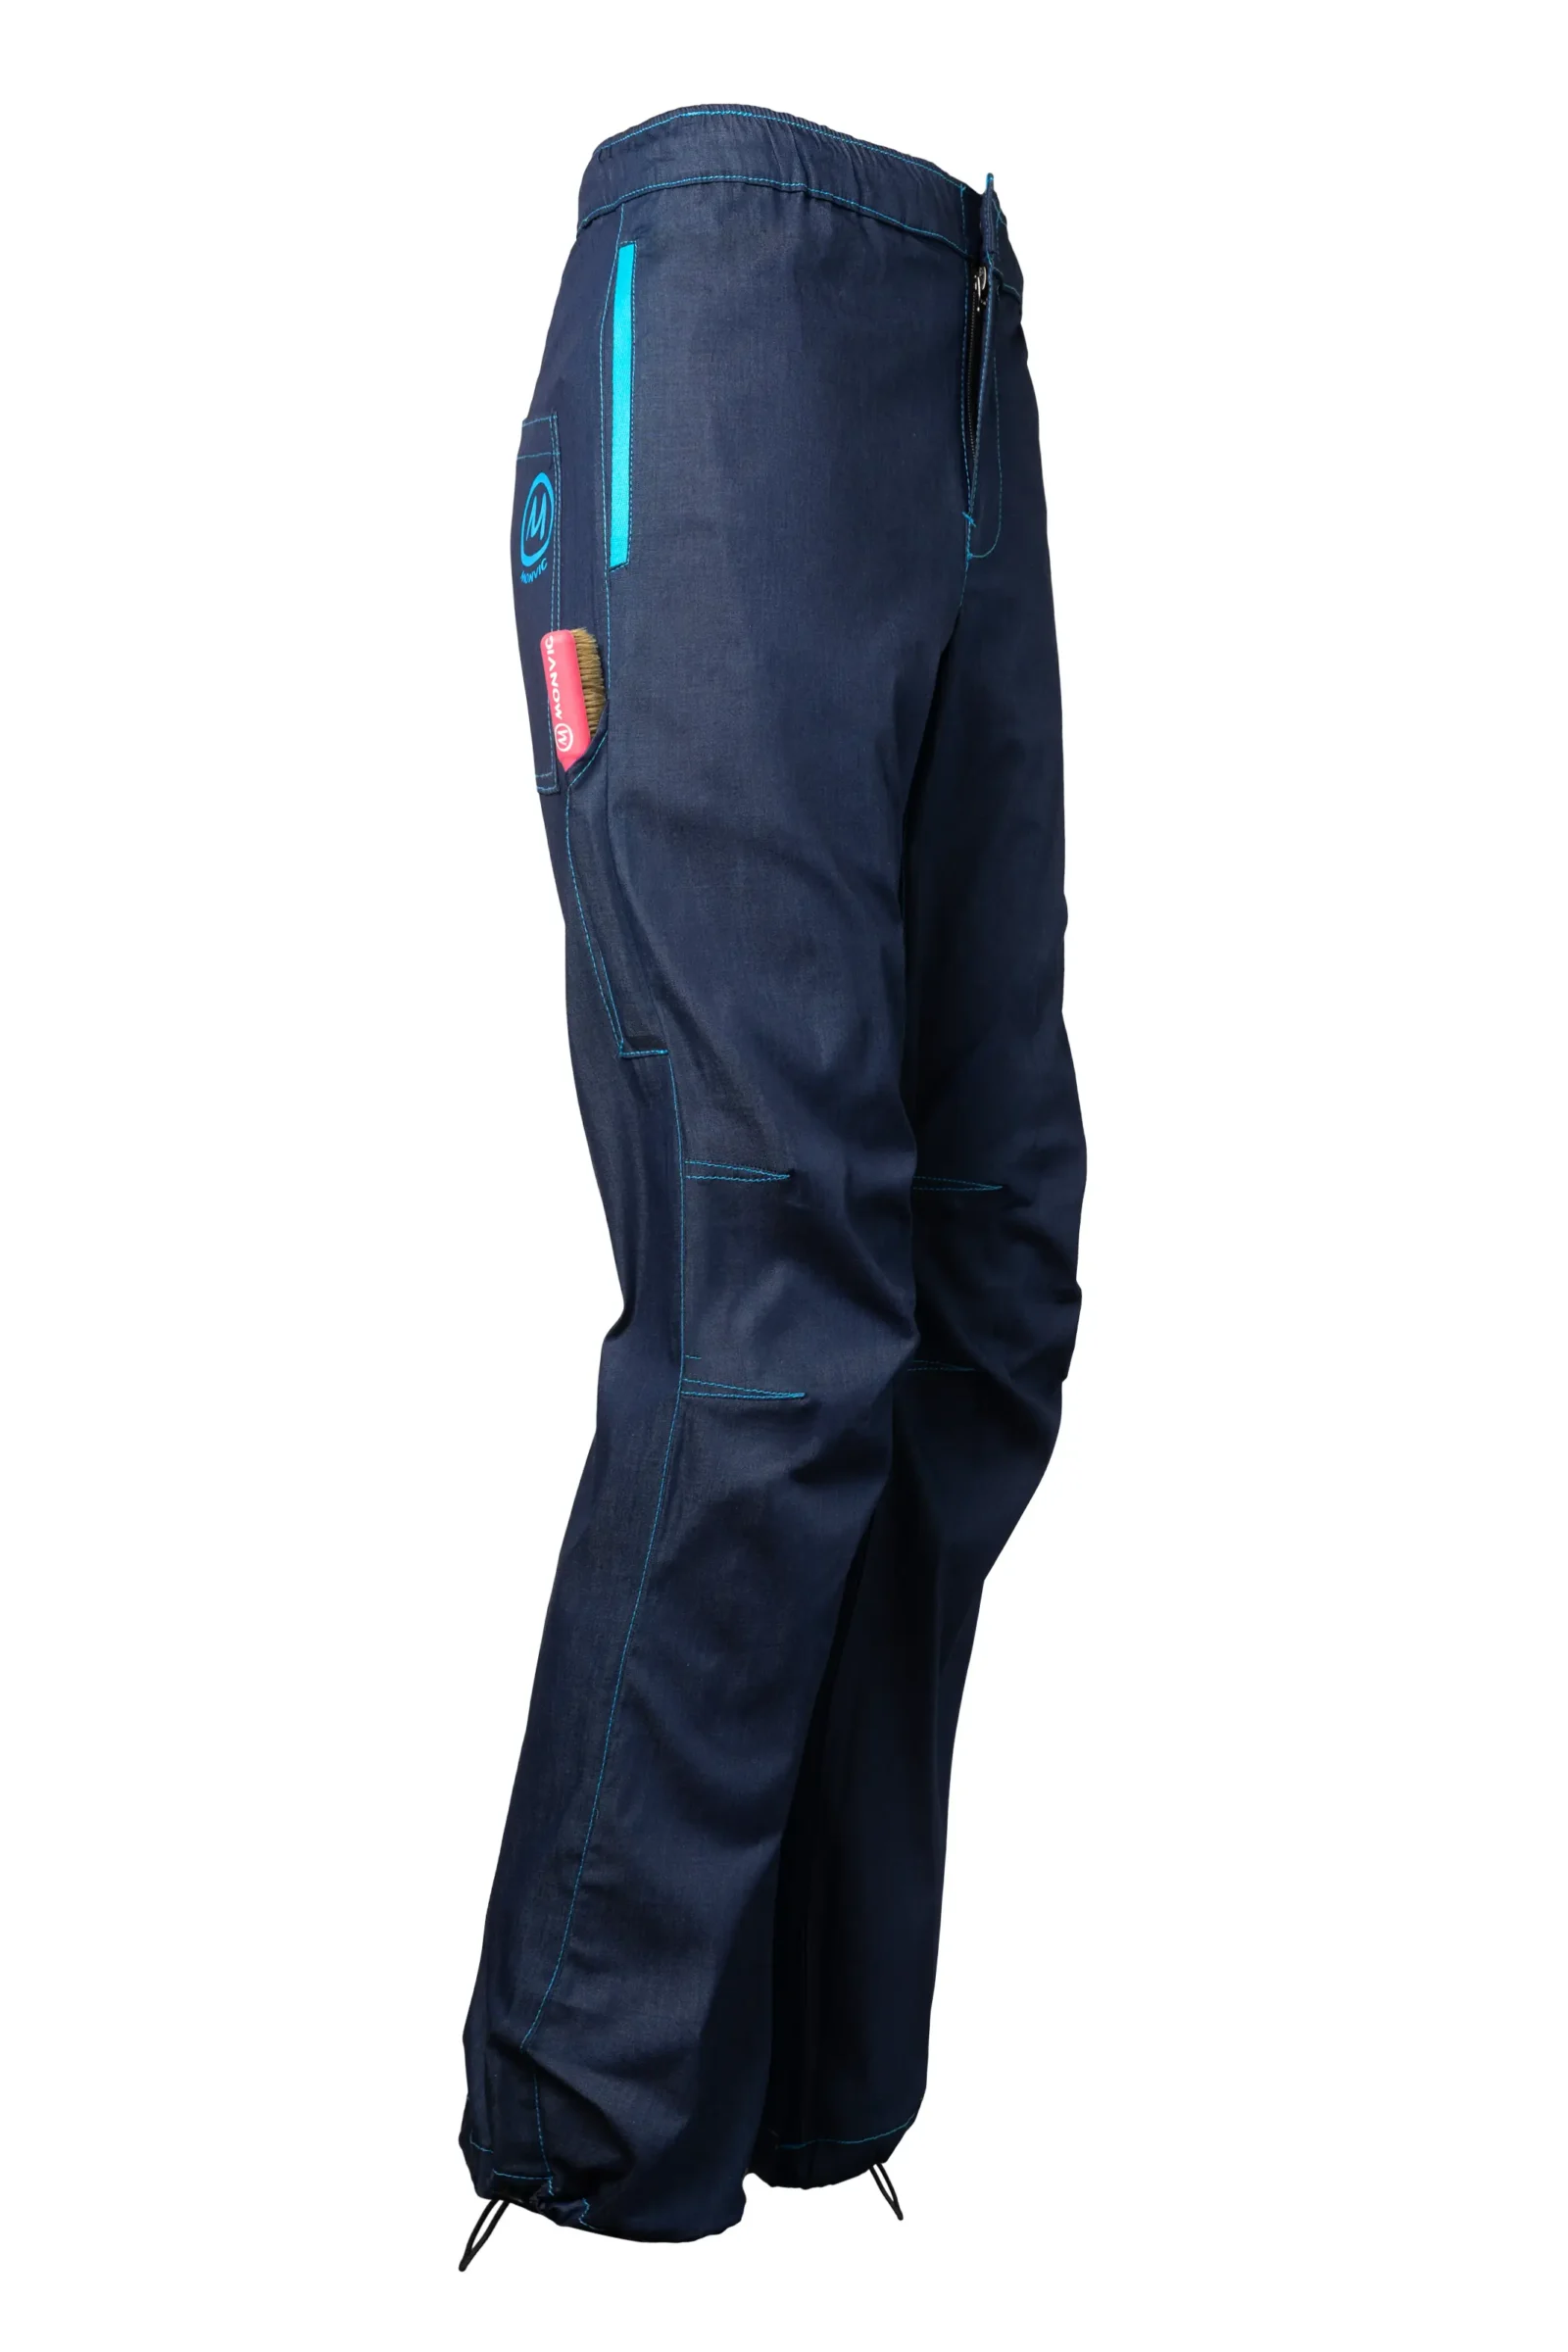 Men's climbing jeans - light blue profile denim - GERONIMO MONVIC